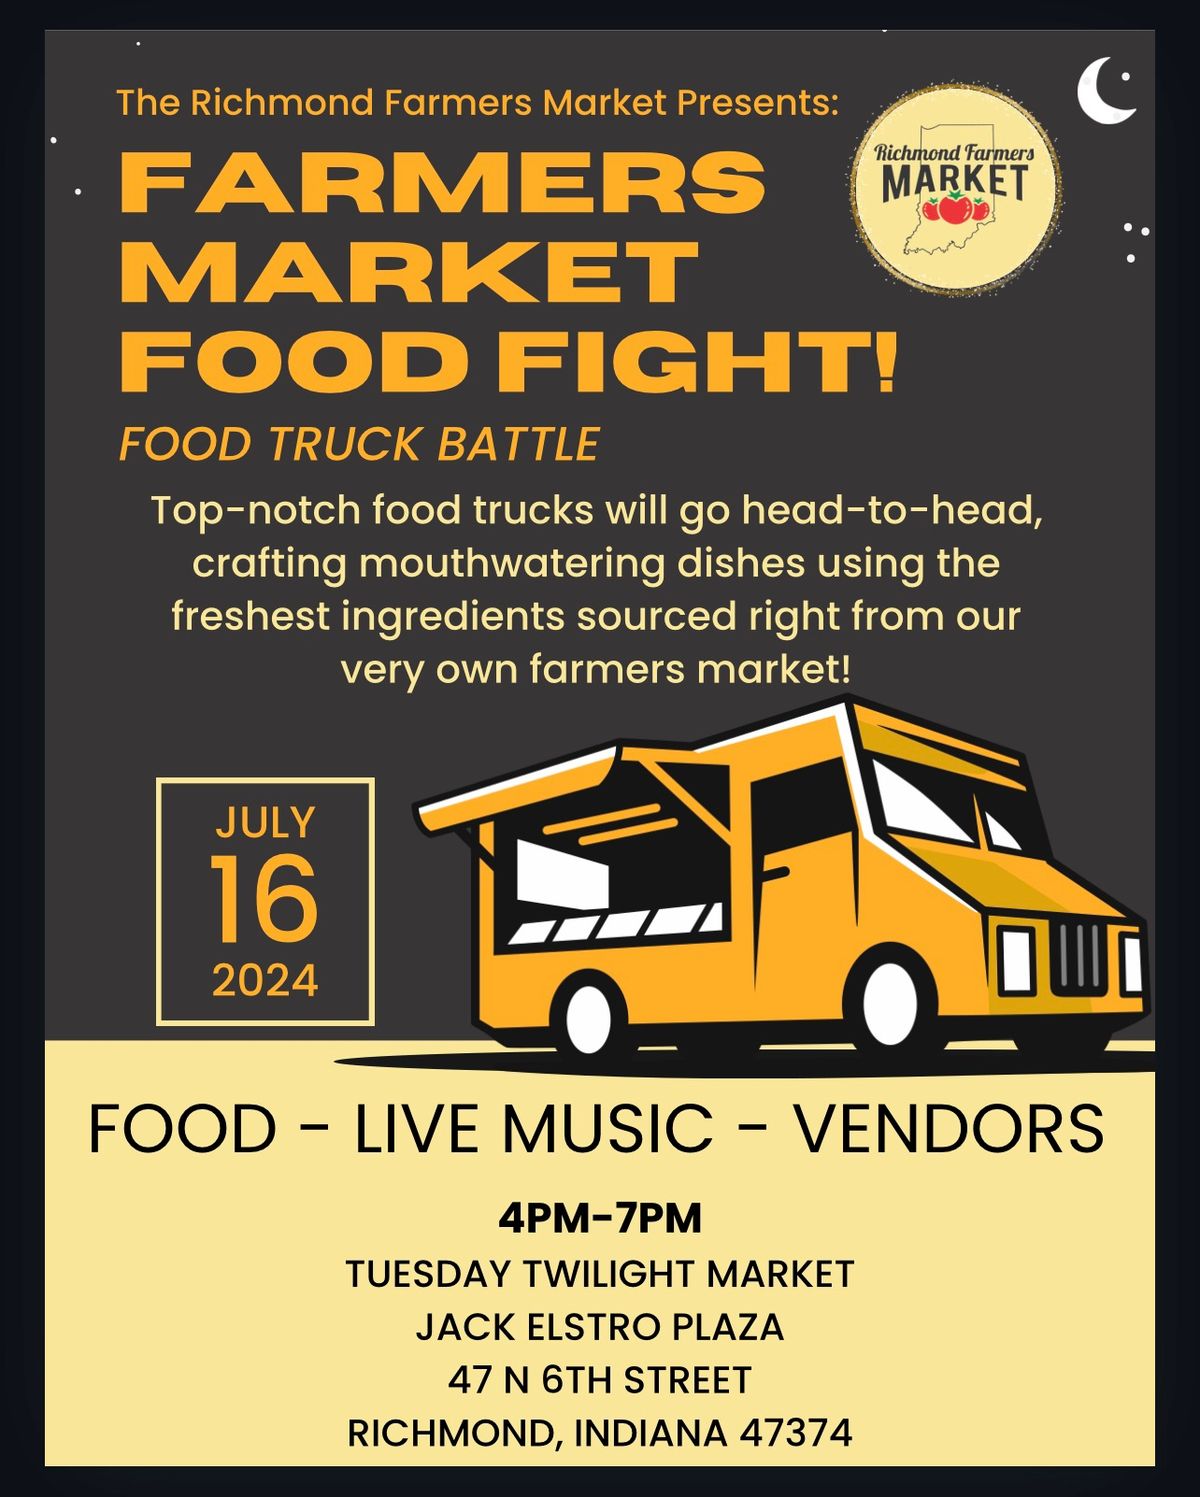 Richmond Farmers Market - TUESDAY TWILIGHT FARMERS MARKET FOOD FIGHT!